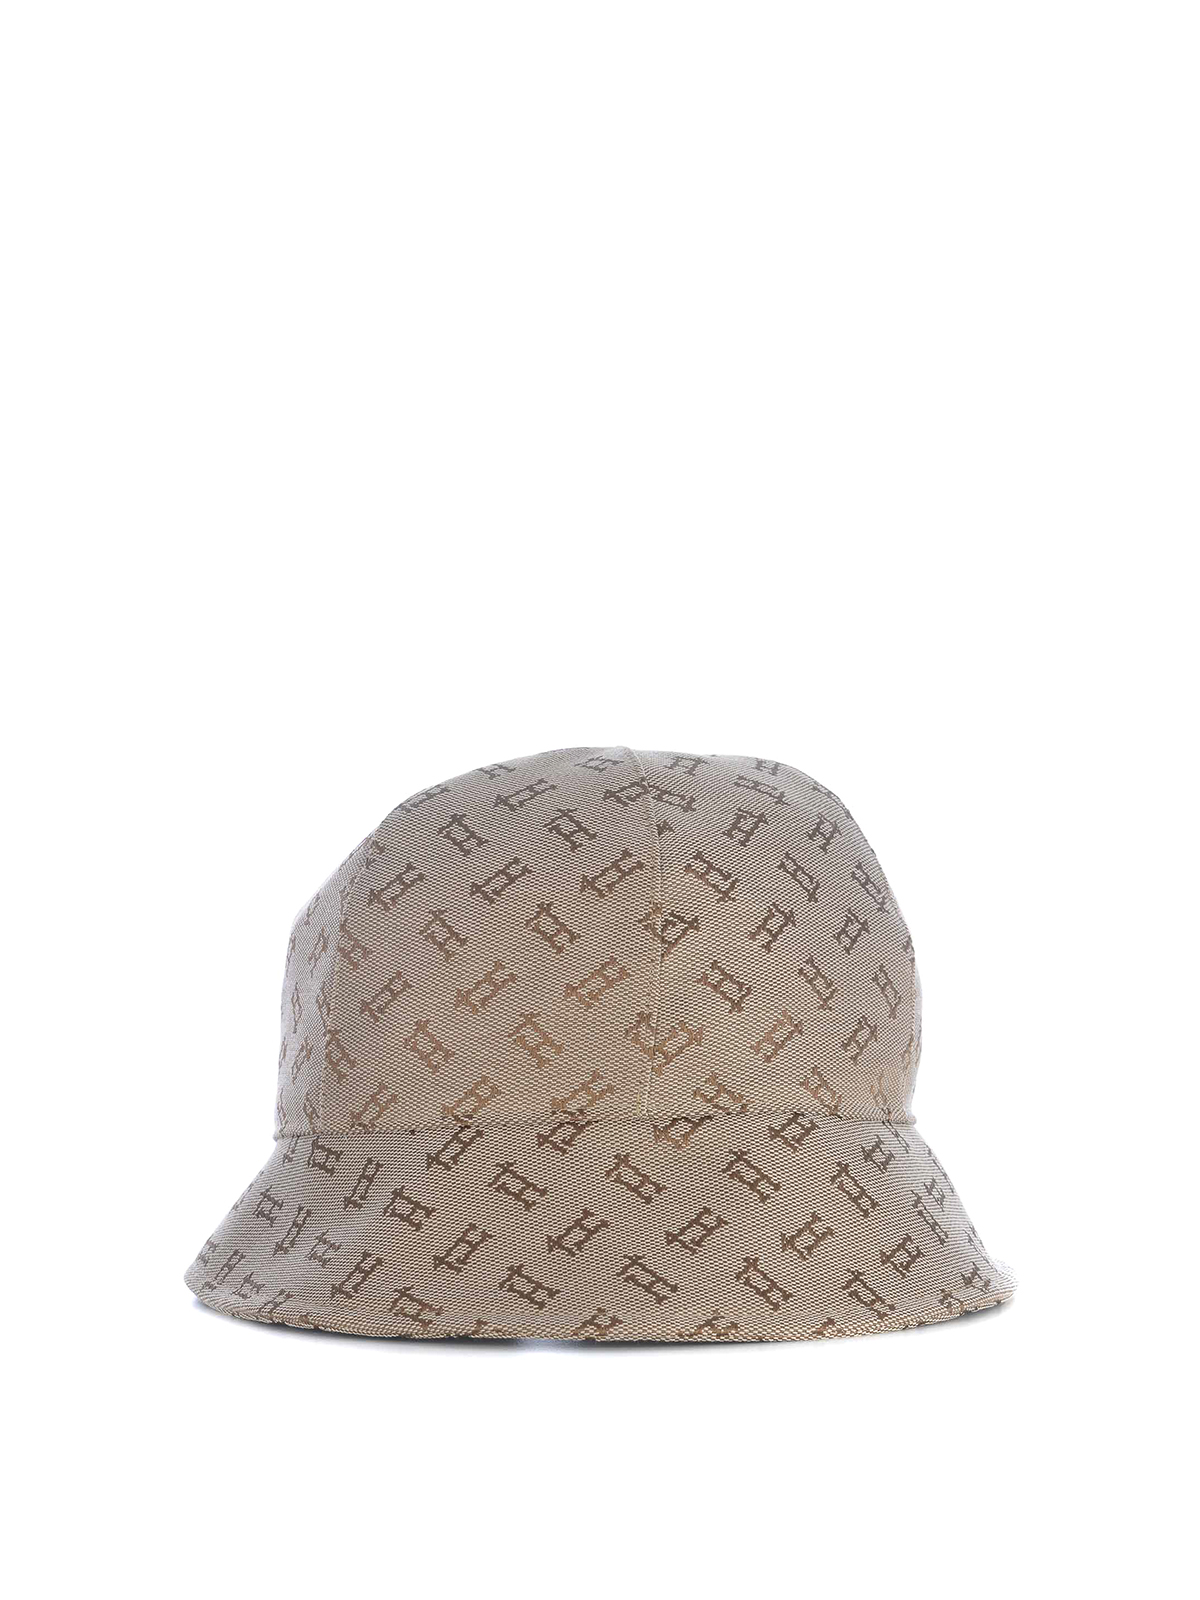 Louis Vuitton Monogram Bandana Straw Hat